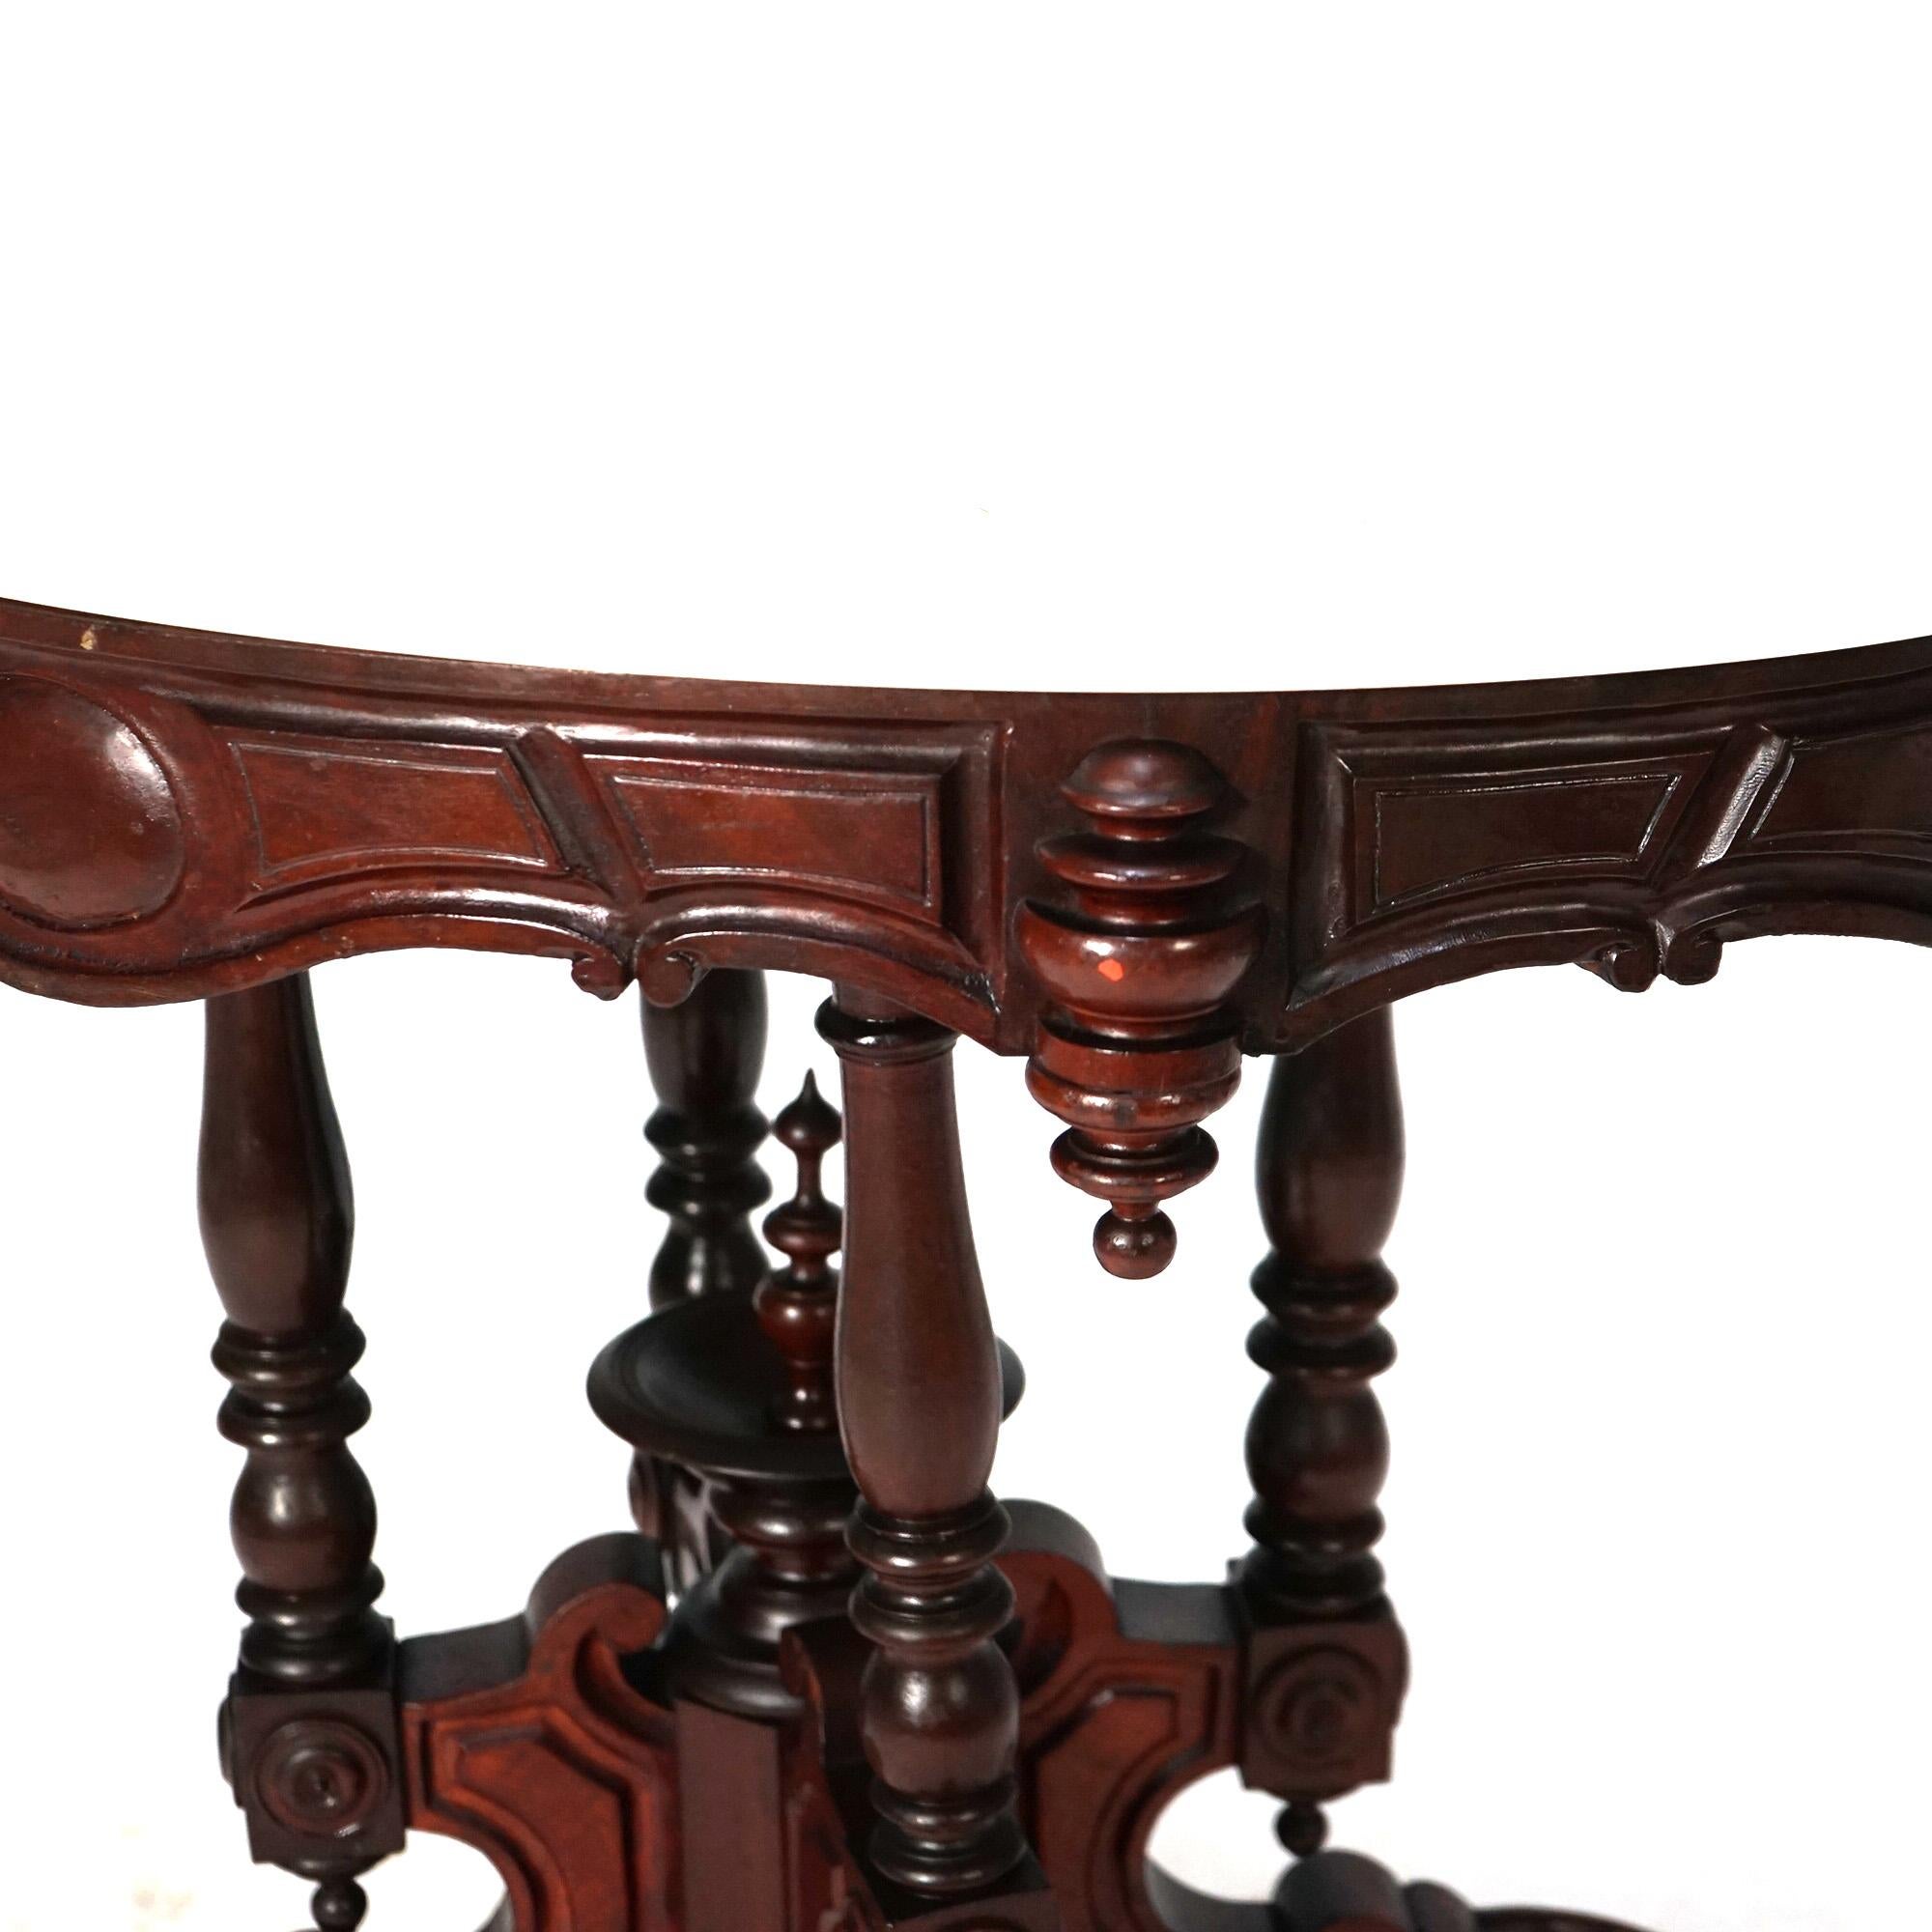 Antique Renaissance Revival Brooks Walnut Oval Marble Top Parlor Table c1890 For Sale 2